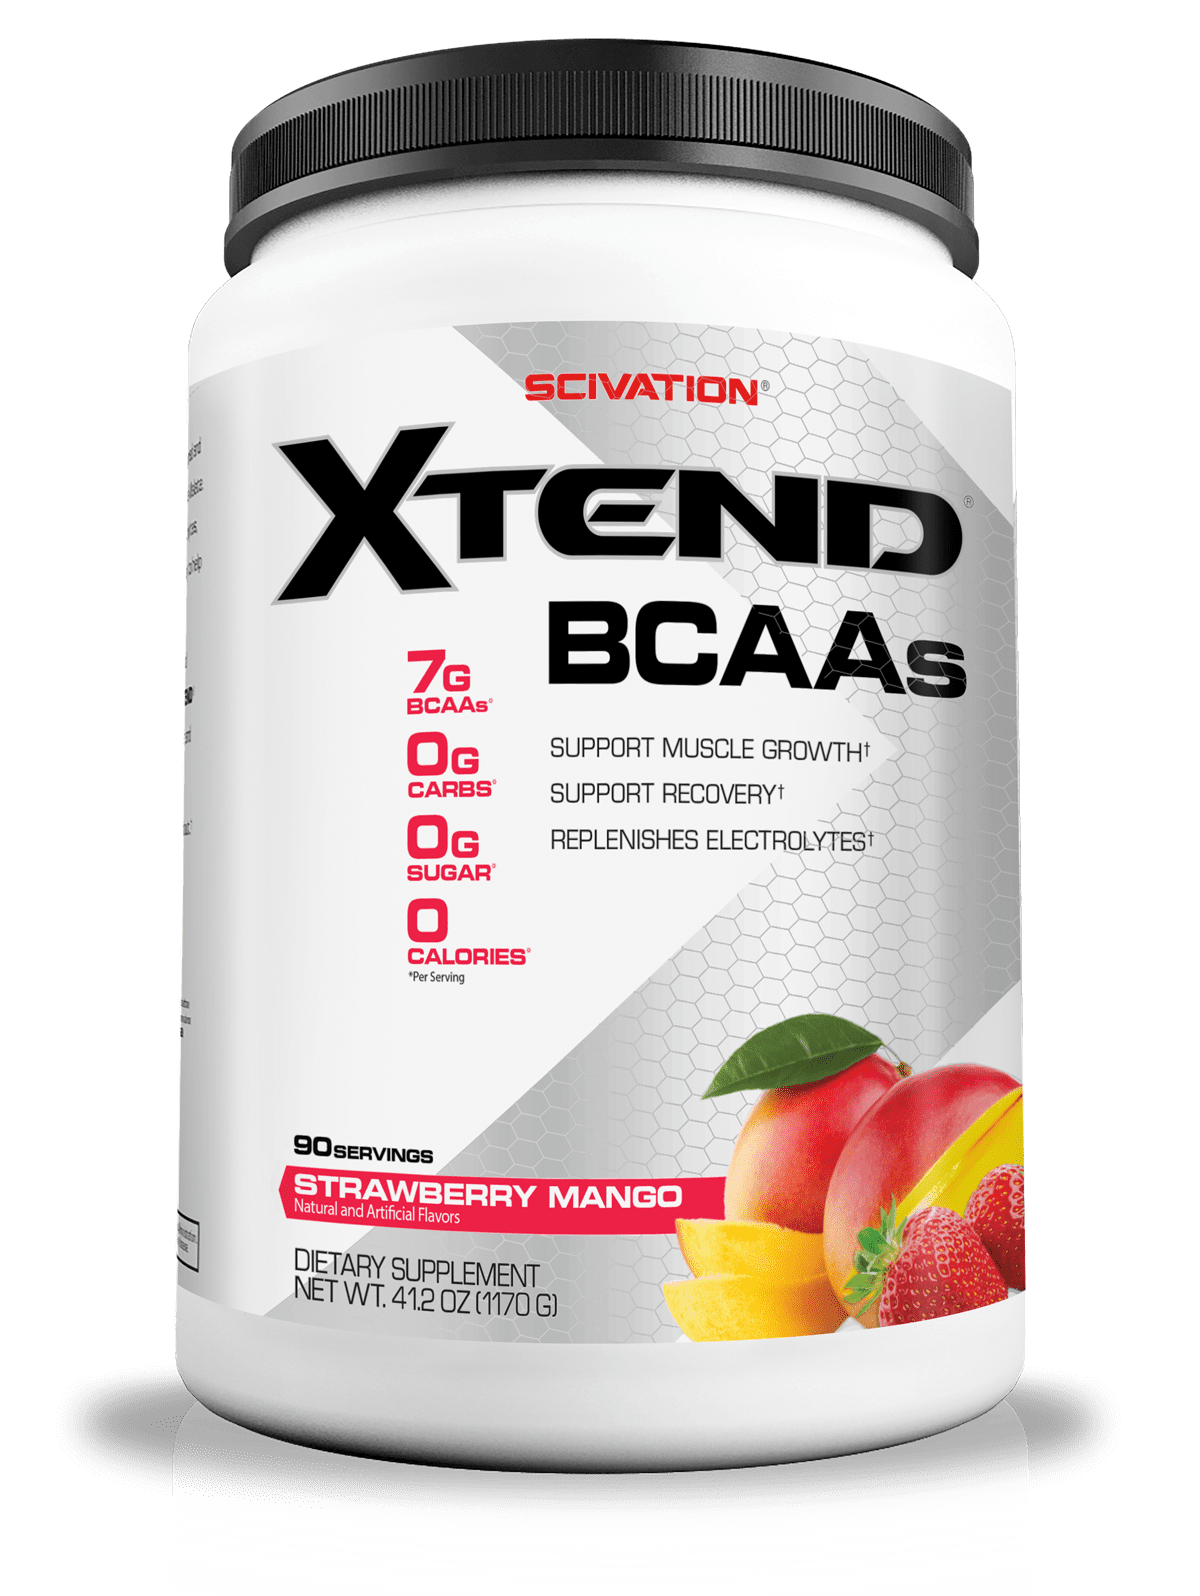 Xtend Original BCAA Powder, Branched Chain Amino Acids, Sugar Free Post Xtend & Climb Pro Series 785p+ Telescoping Ladder